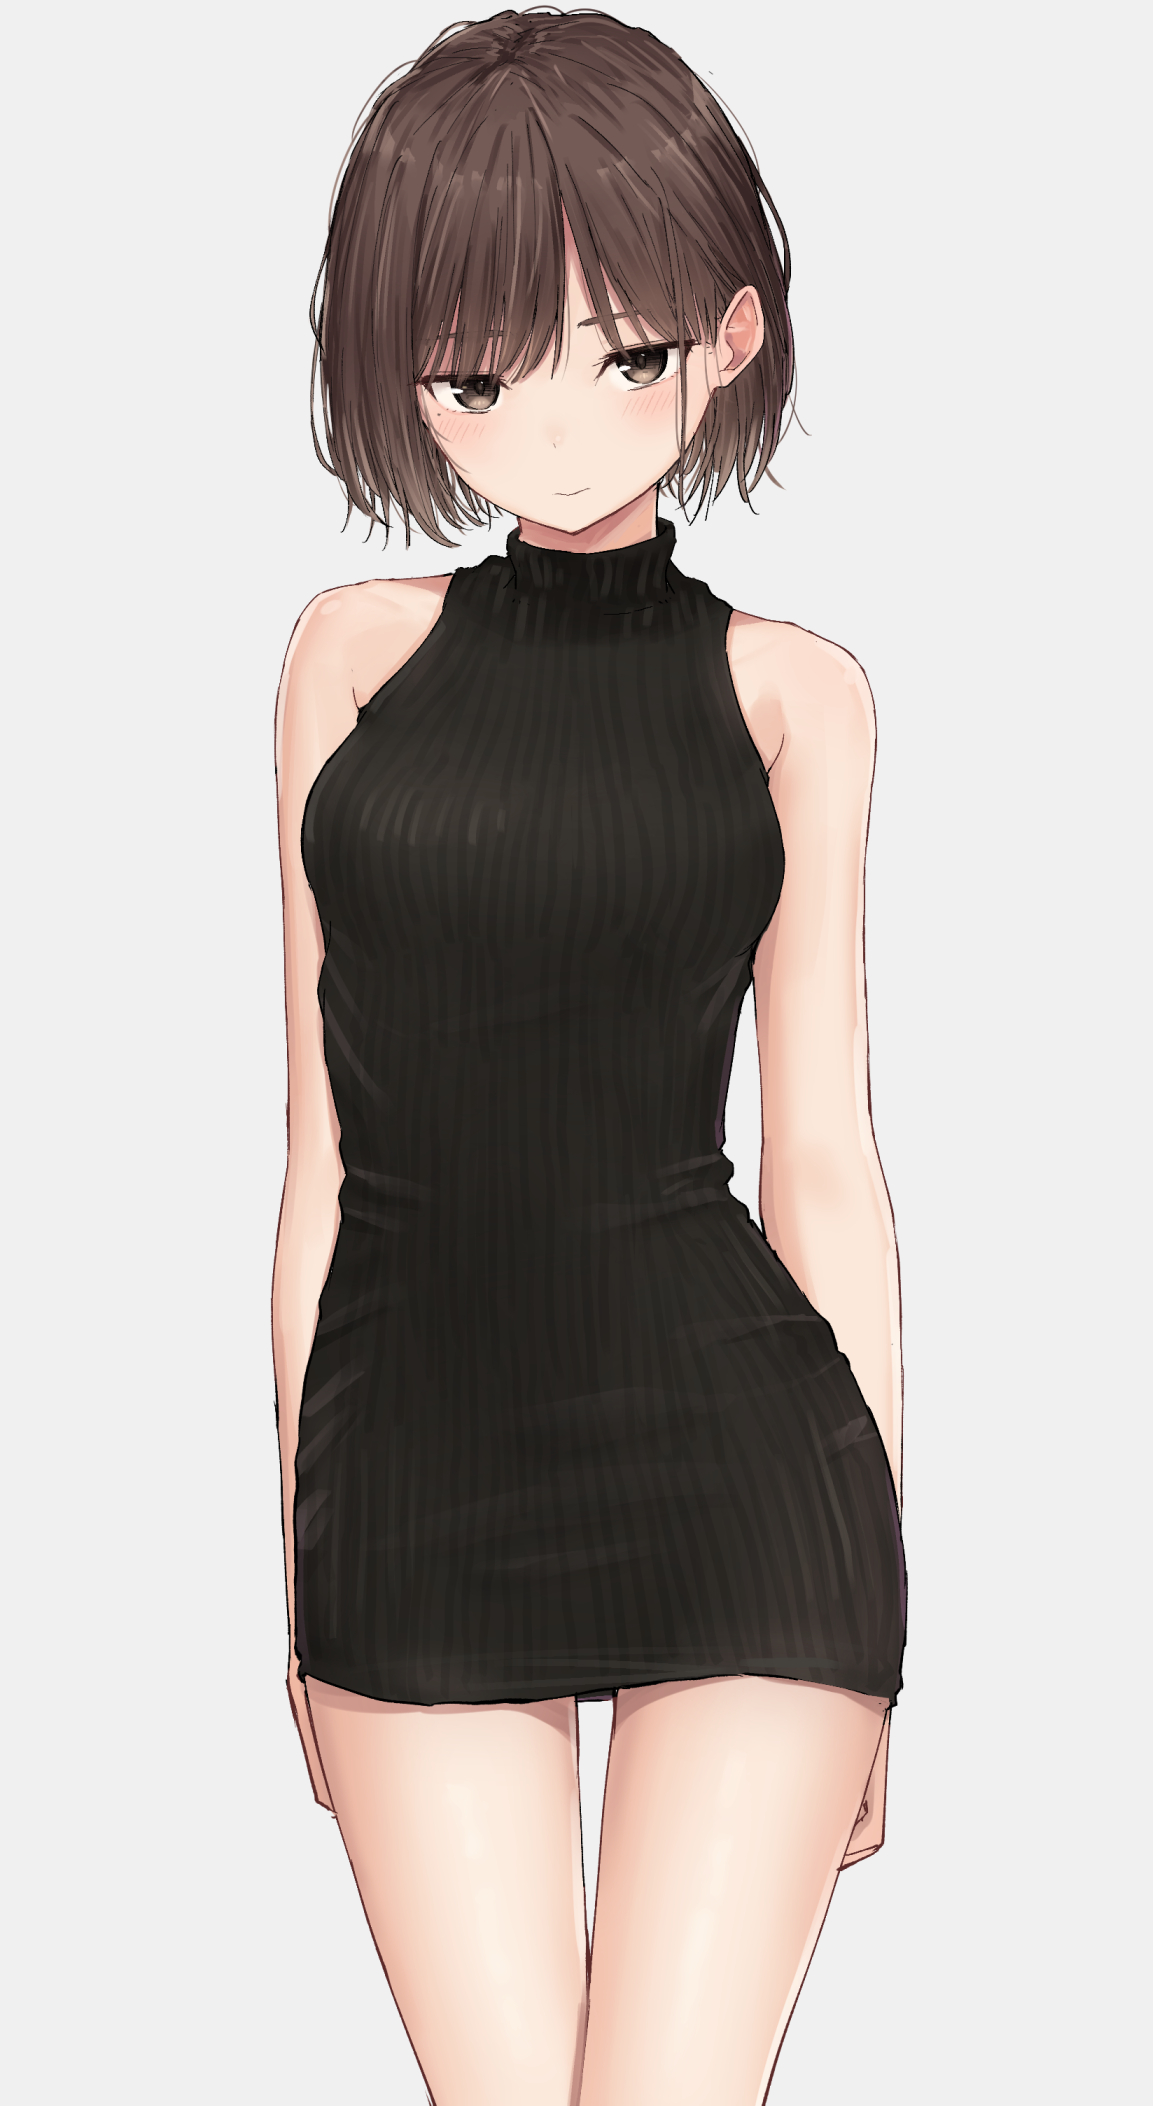 Anime 1153x2106 anime anime girls digital art artwork 2D portrait display black dress simple background short hair brunette brown eyes dress sweater dress Zuima